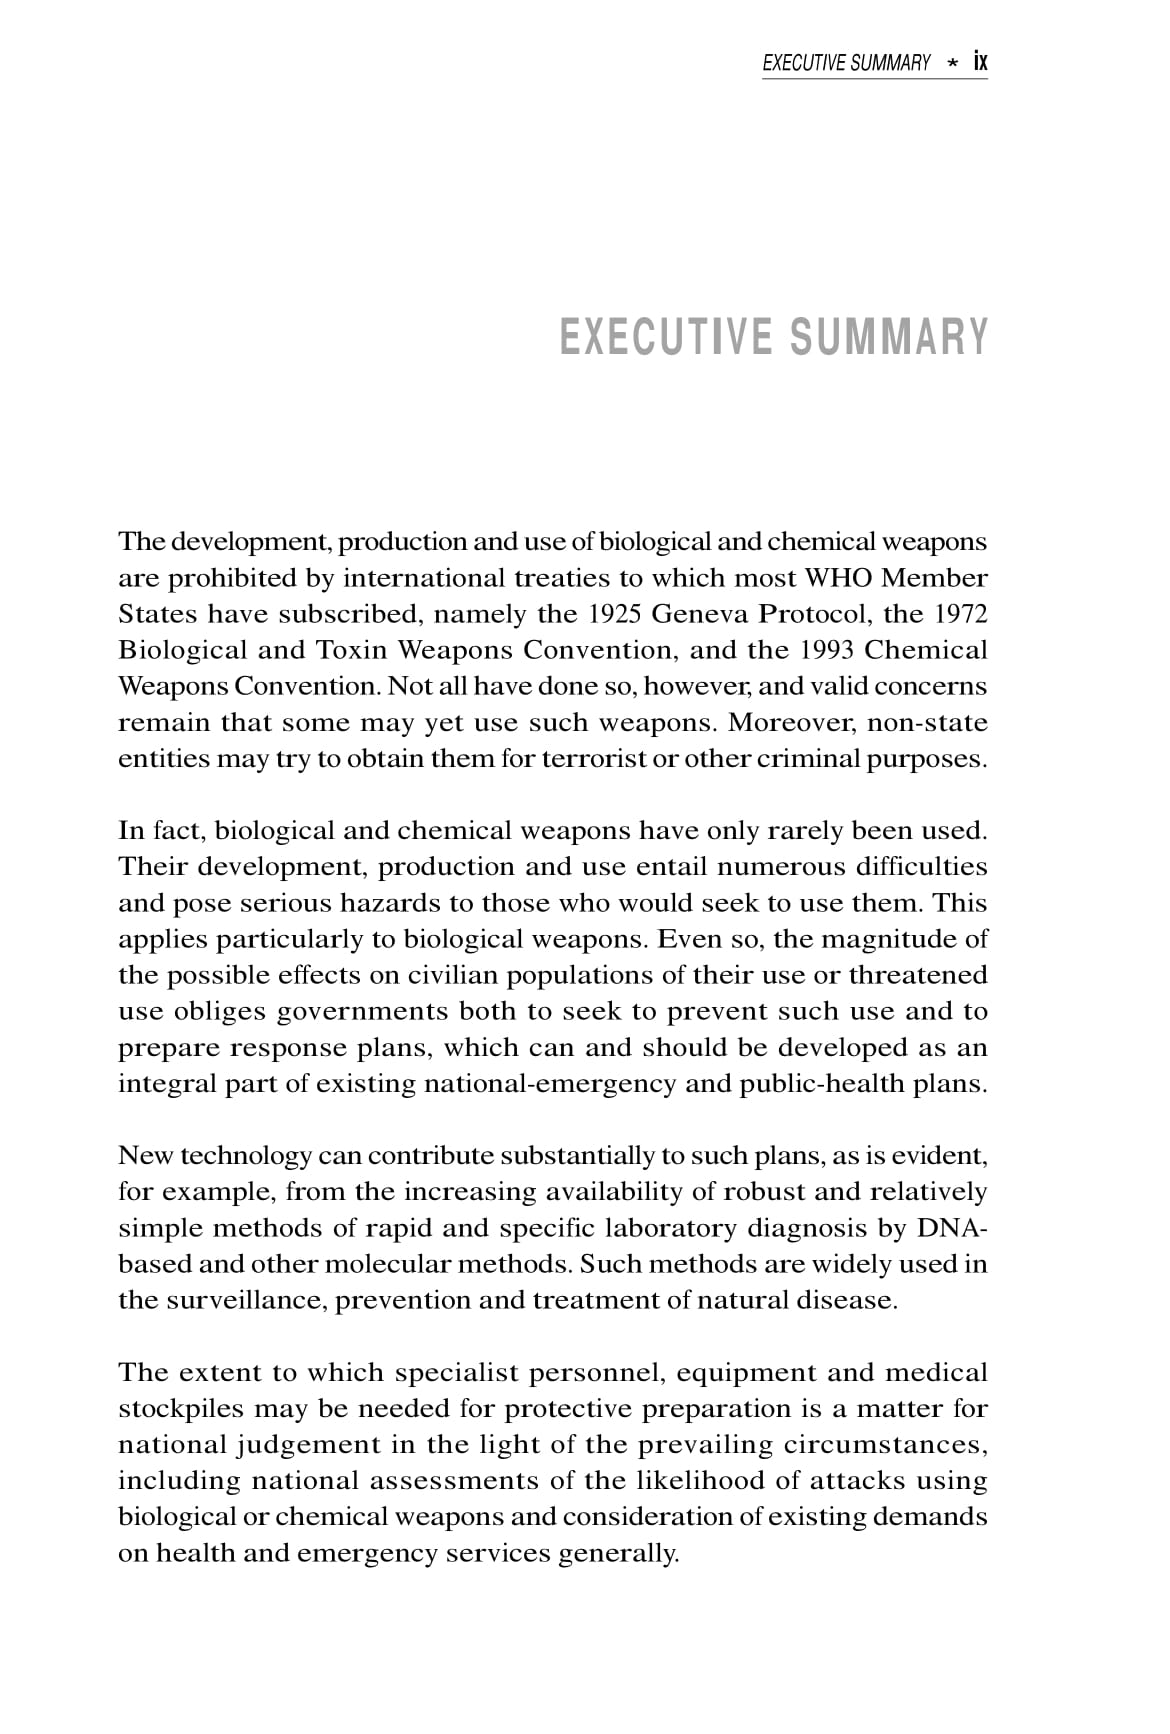 thesis executive summary pdf